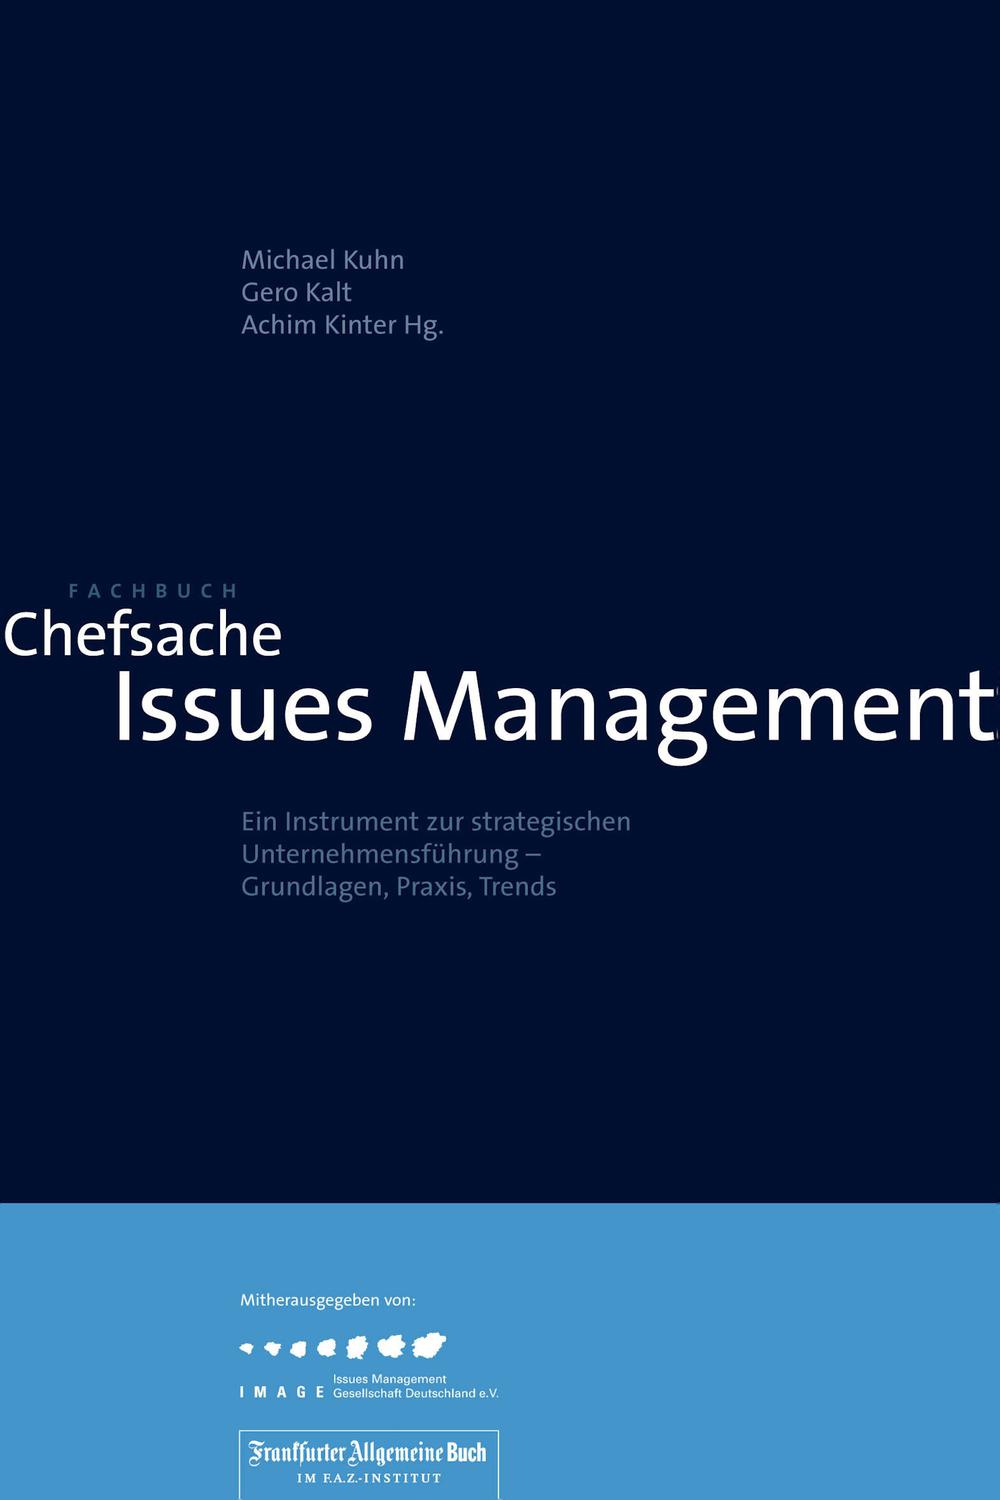 Chefsache Issues Management - Gero Kalt, Achim Kinter, Michael Kuhn